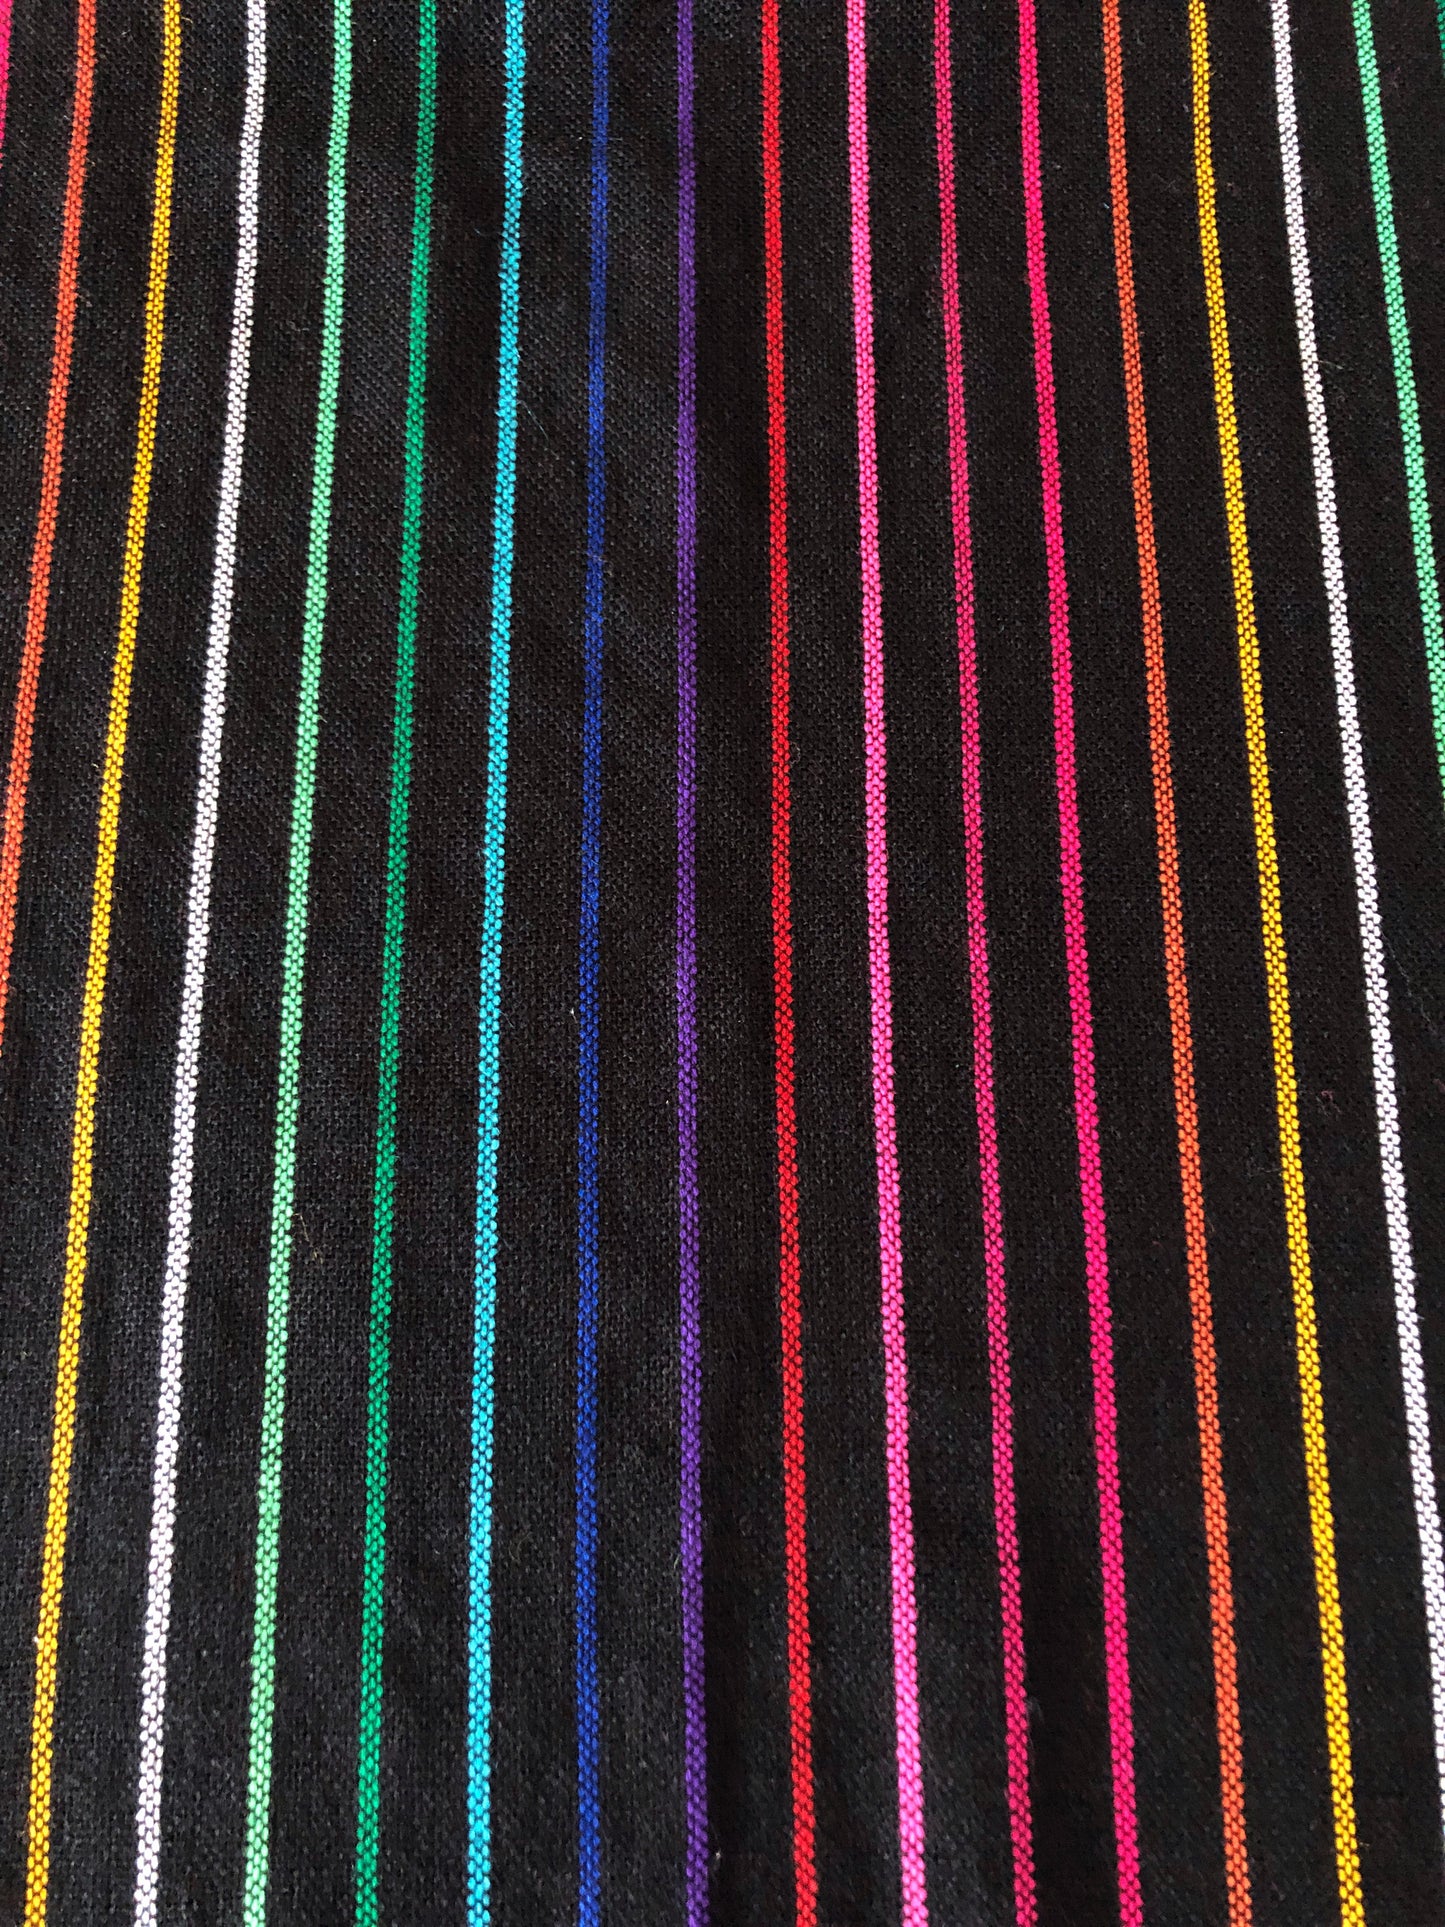 Mexican Fabric Table Runner - Black rainbow stripes